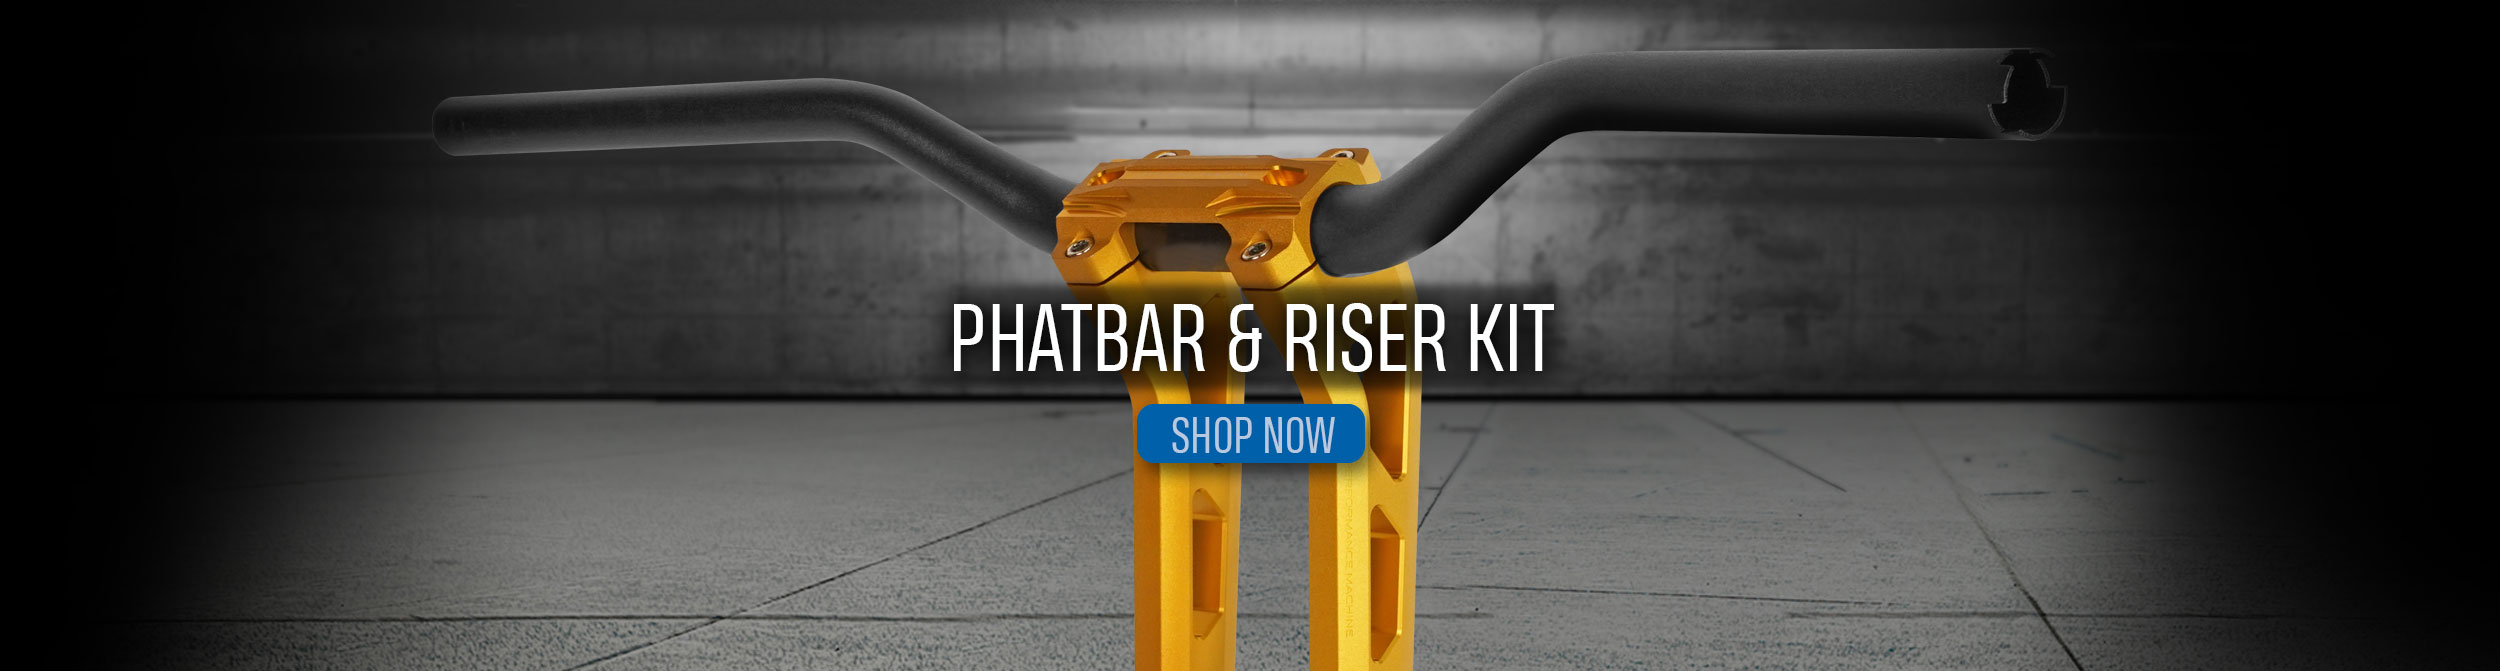 Phatbar & Riser Kit